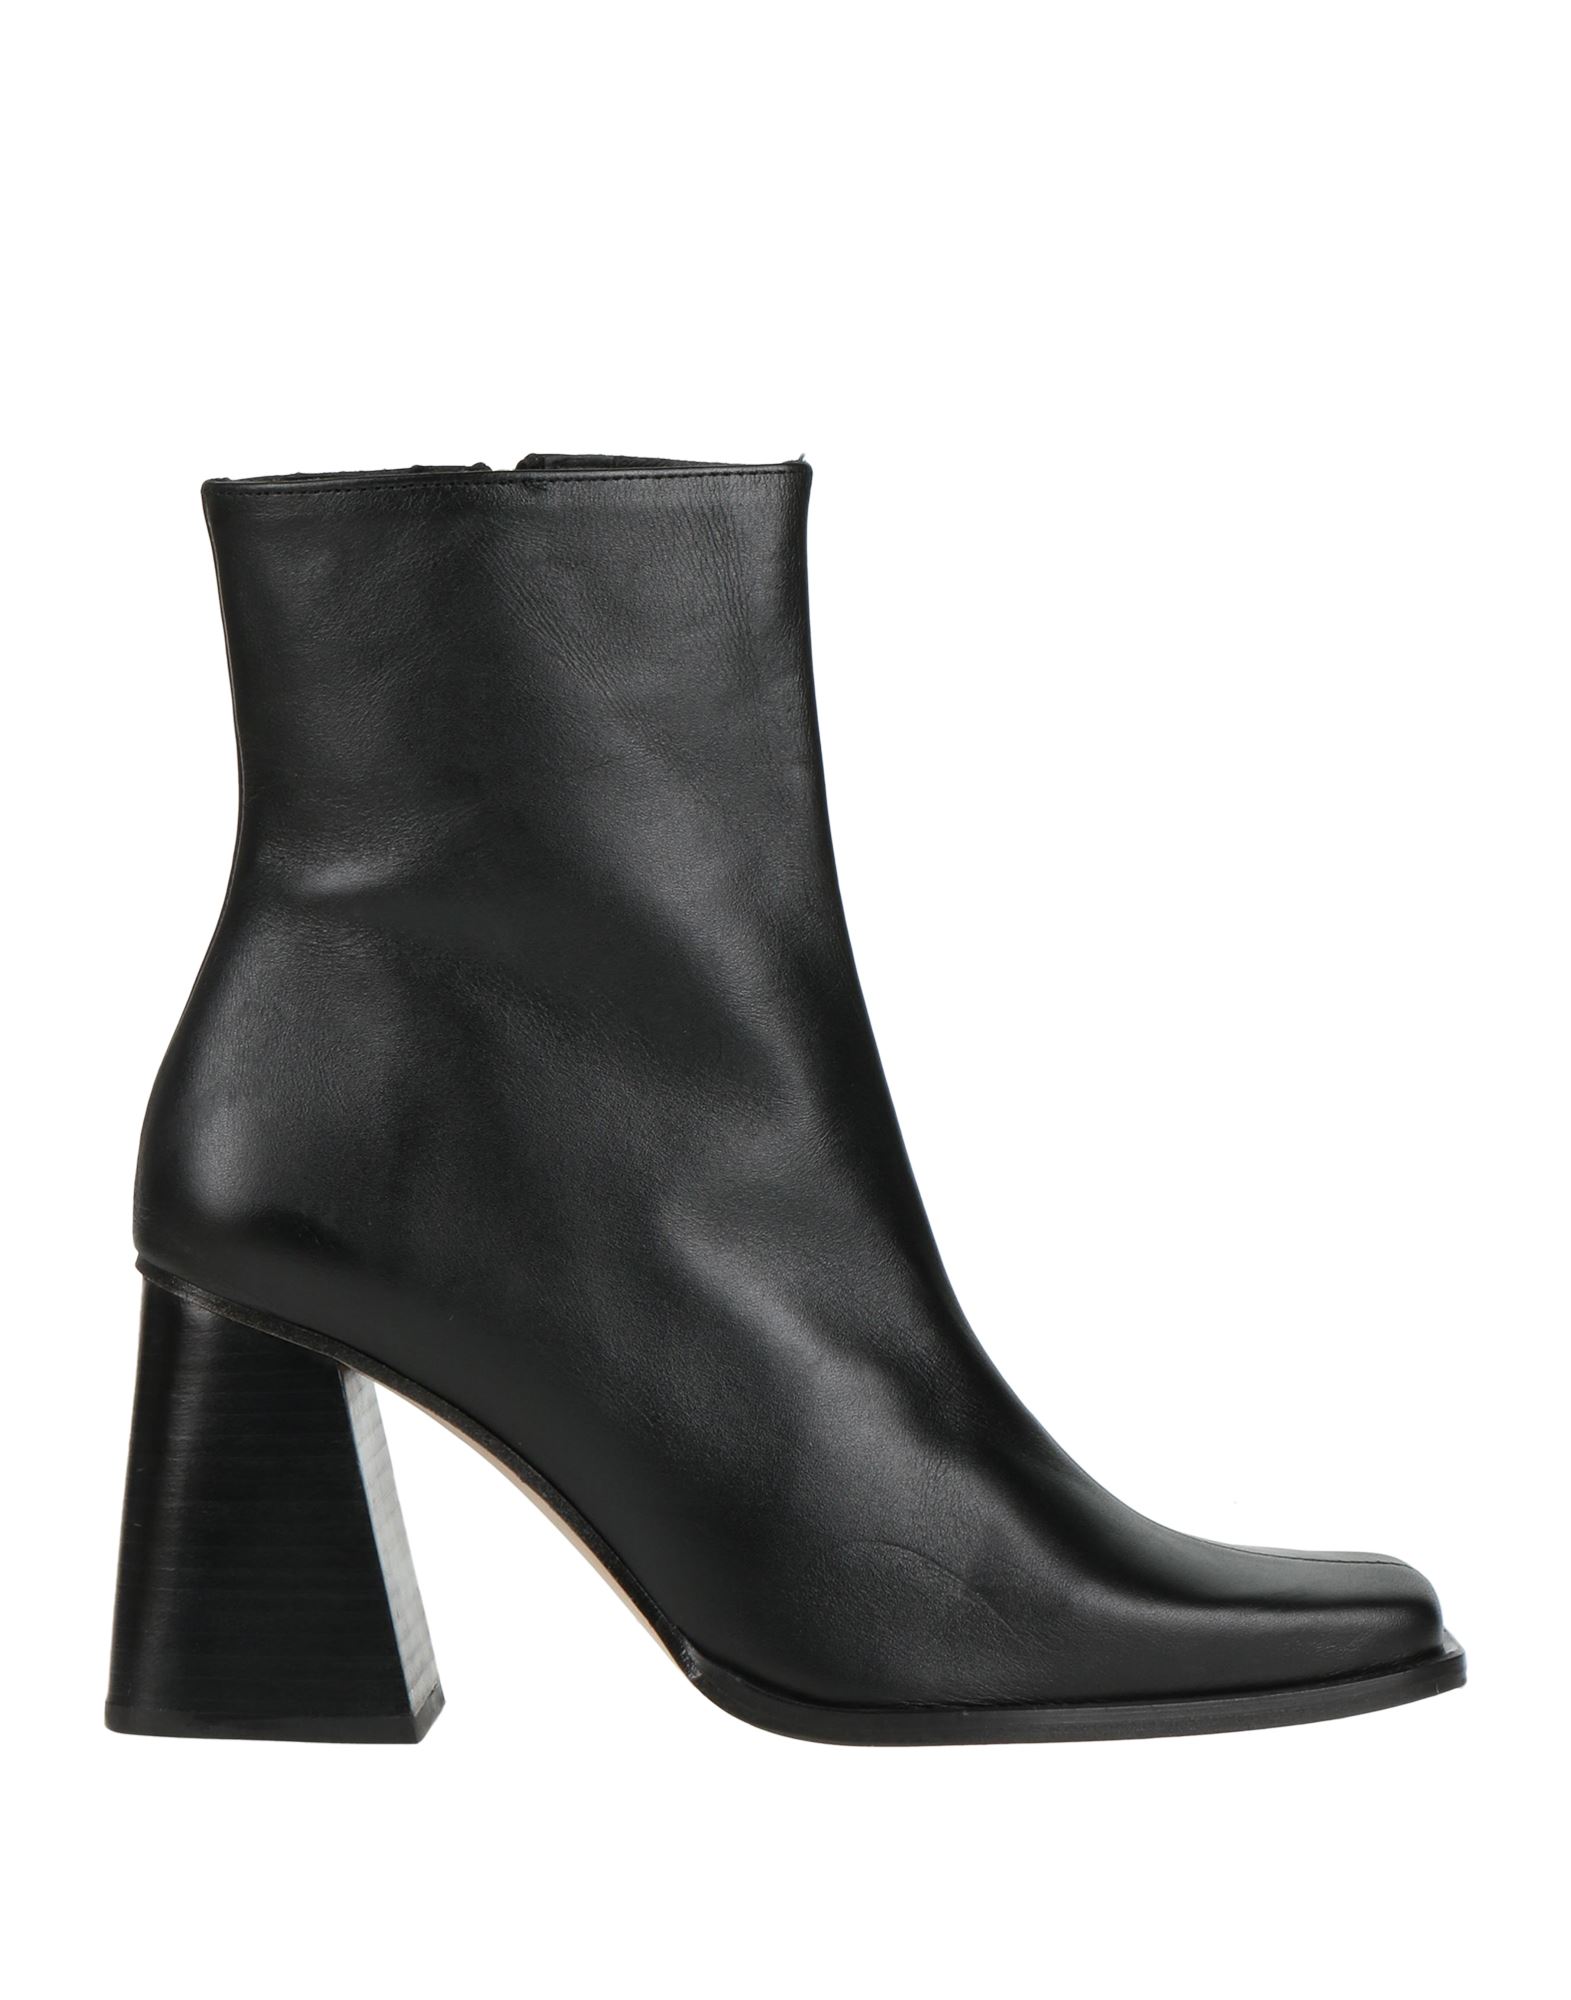 Shop Alohas Woman Ankle Boots Black Size 6 Soft Leather